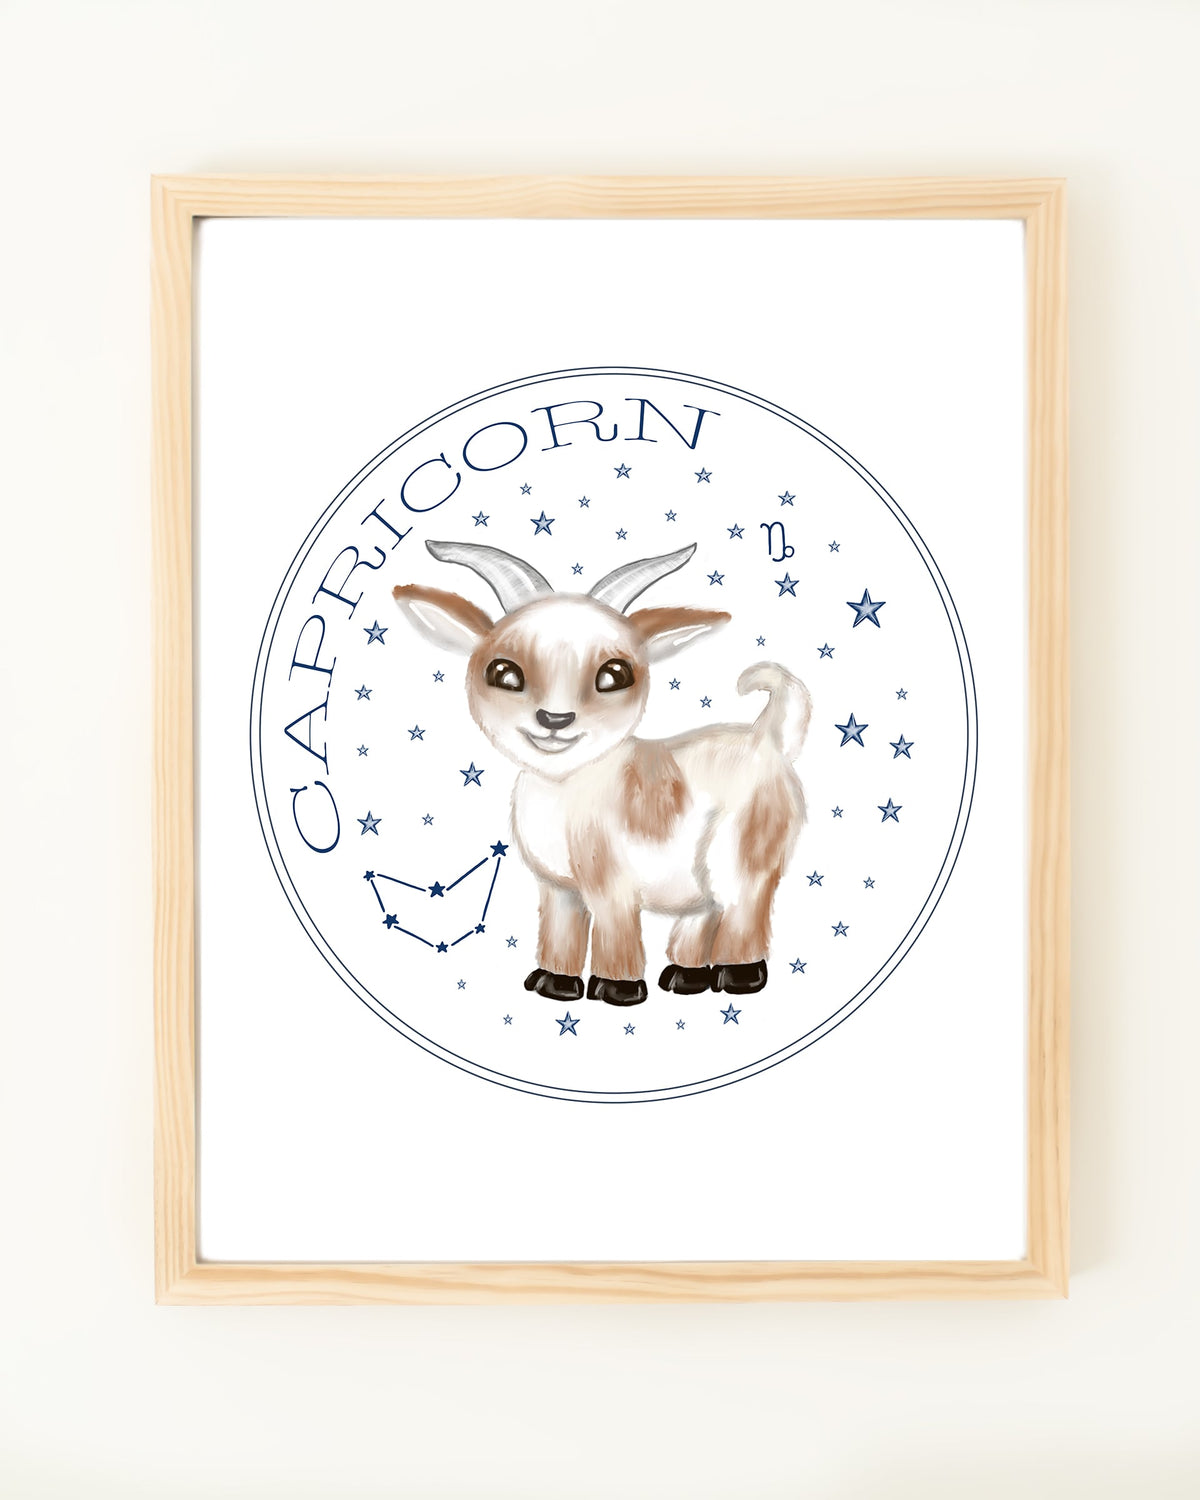 Framed hand drawn stars zodiac nursery decor wall art poster Capricorn cute baby animal farm goat